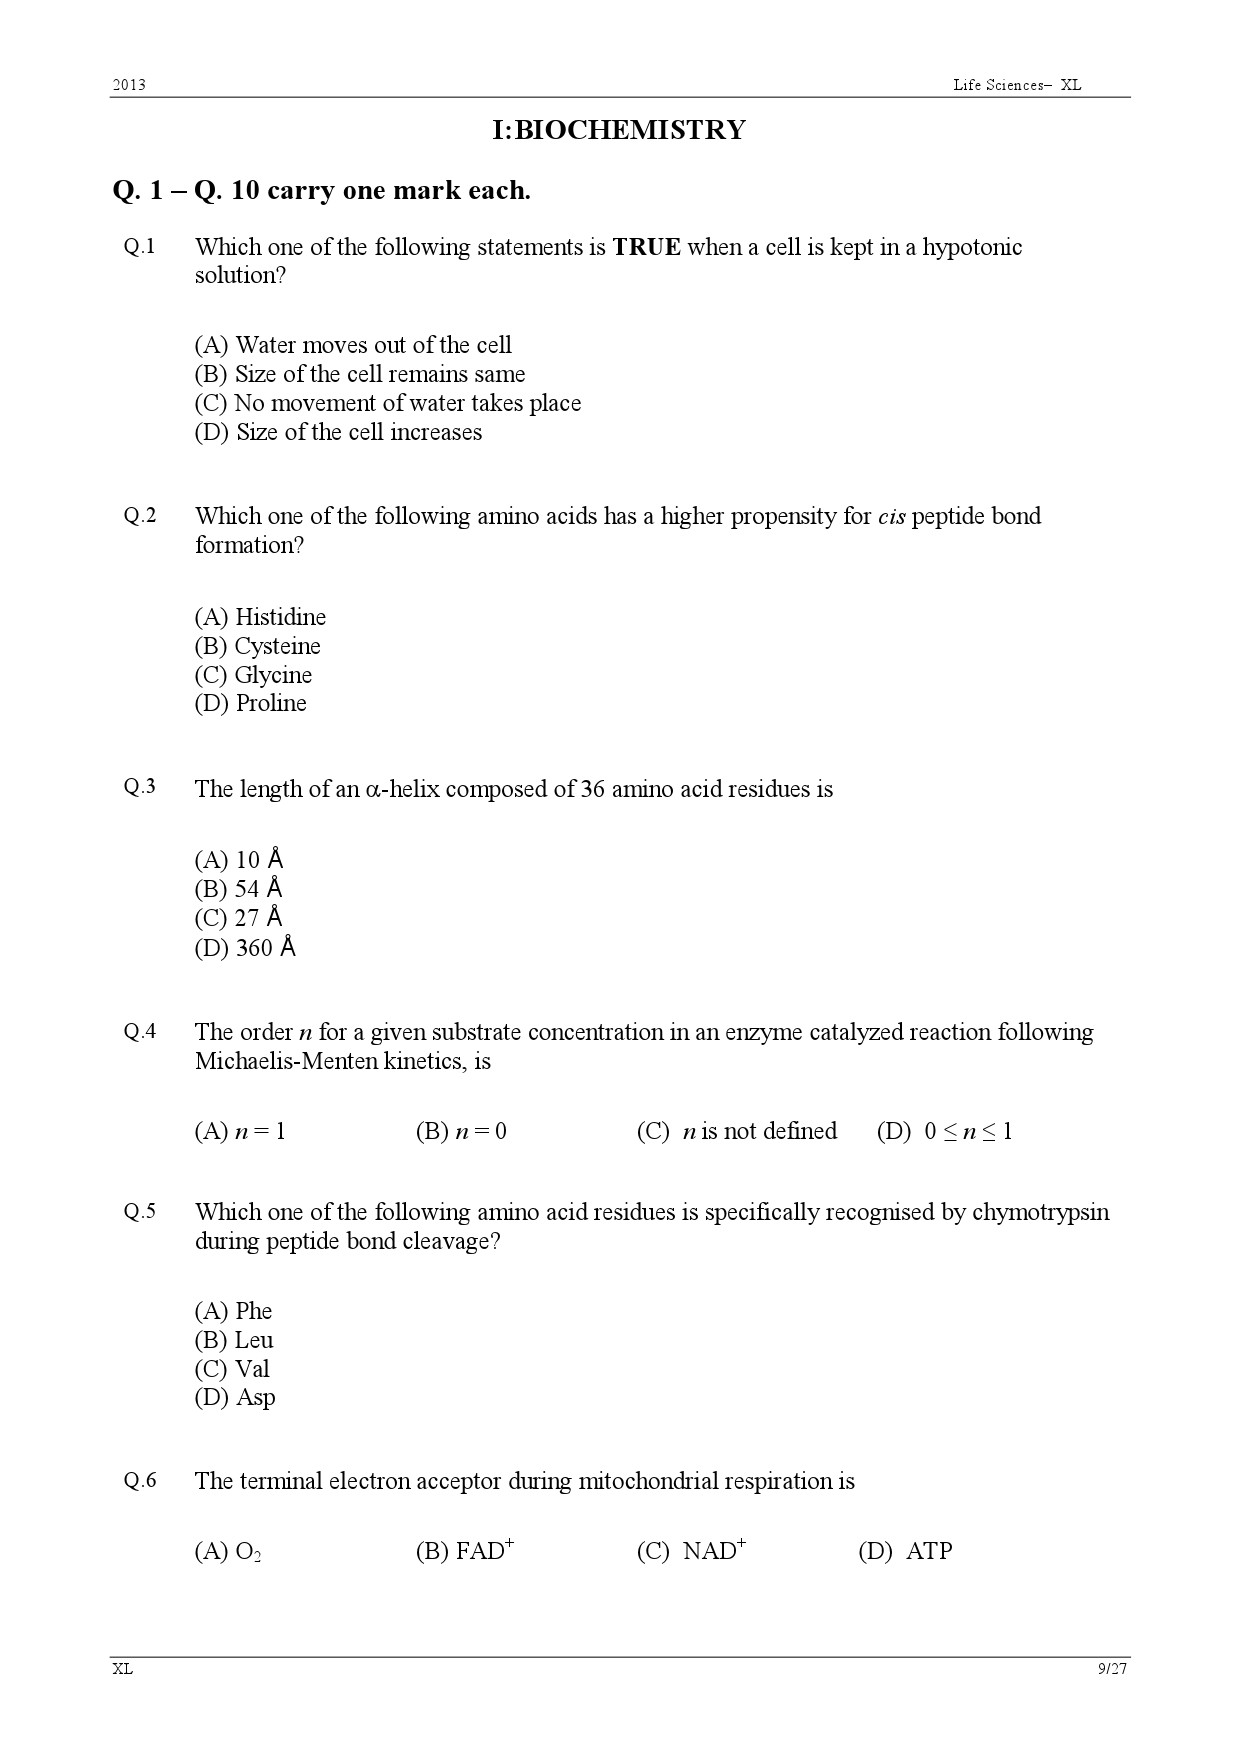 GATE Exam Question Paper 2013 Life Sciences 9